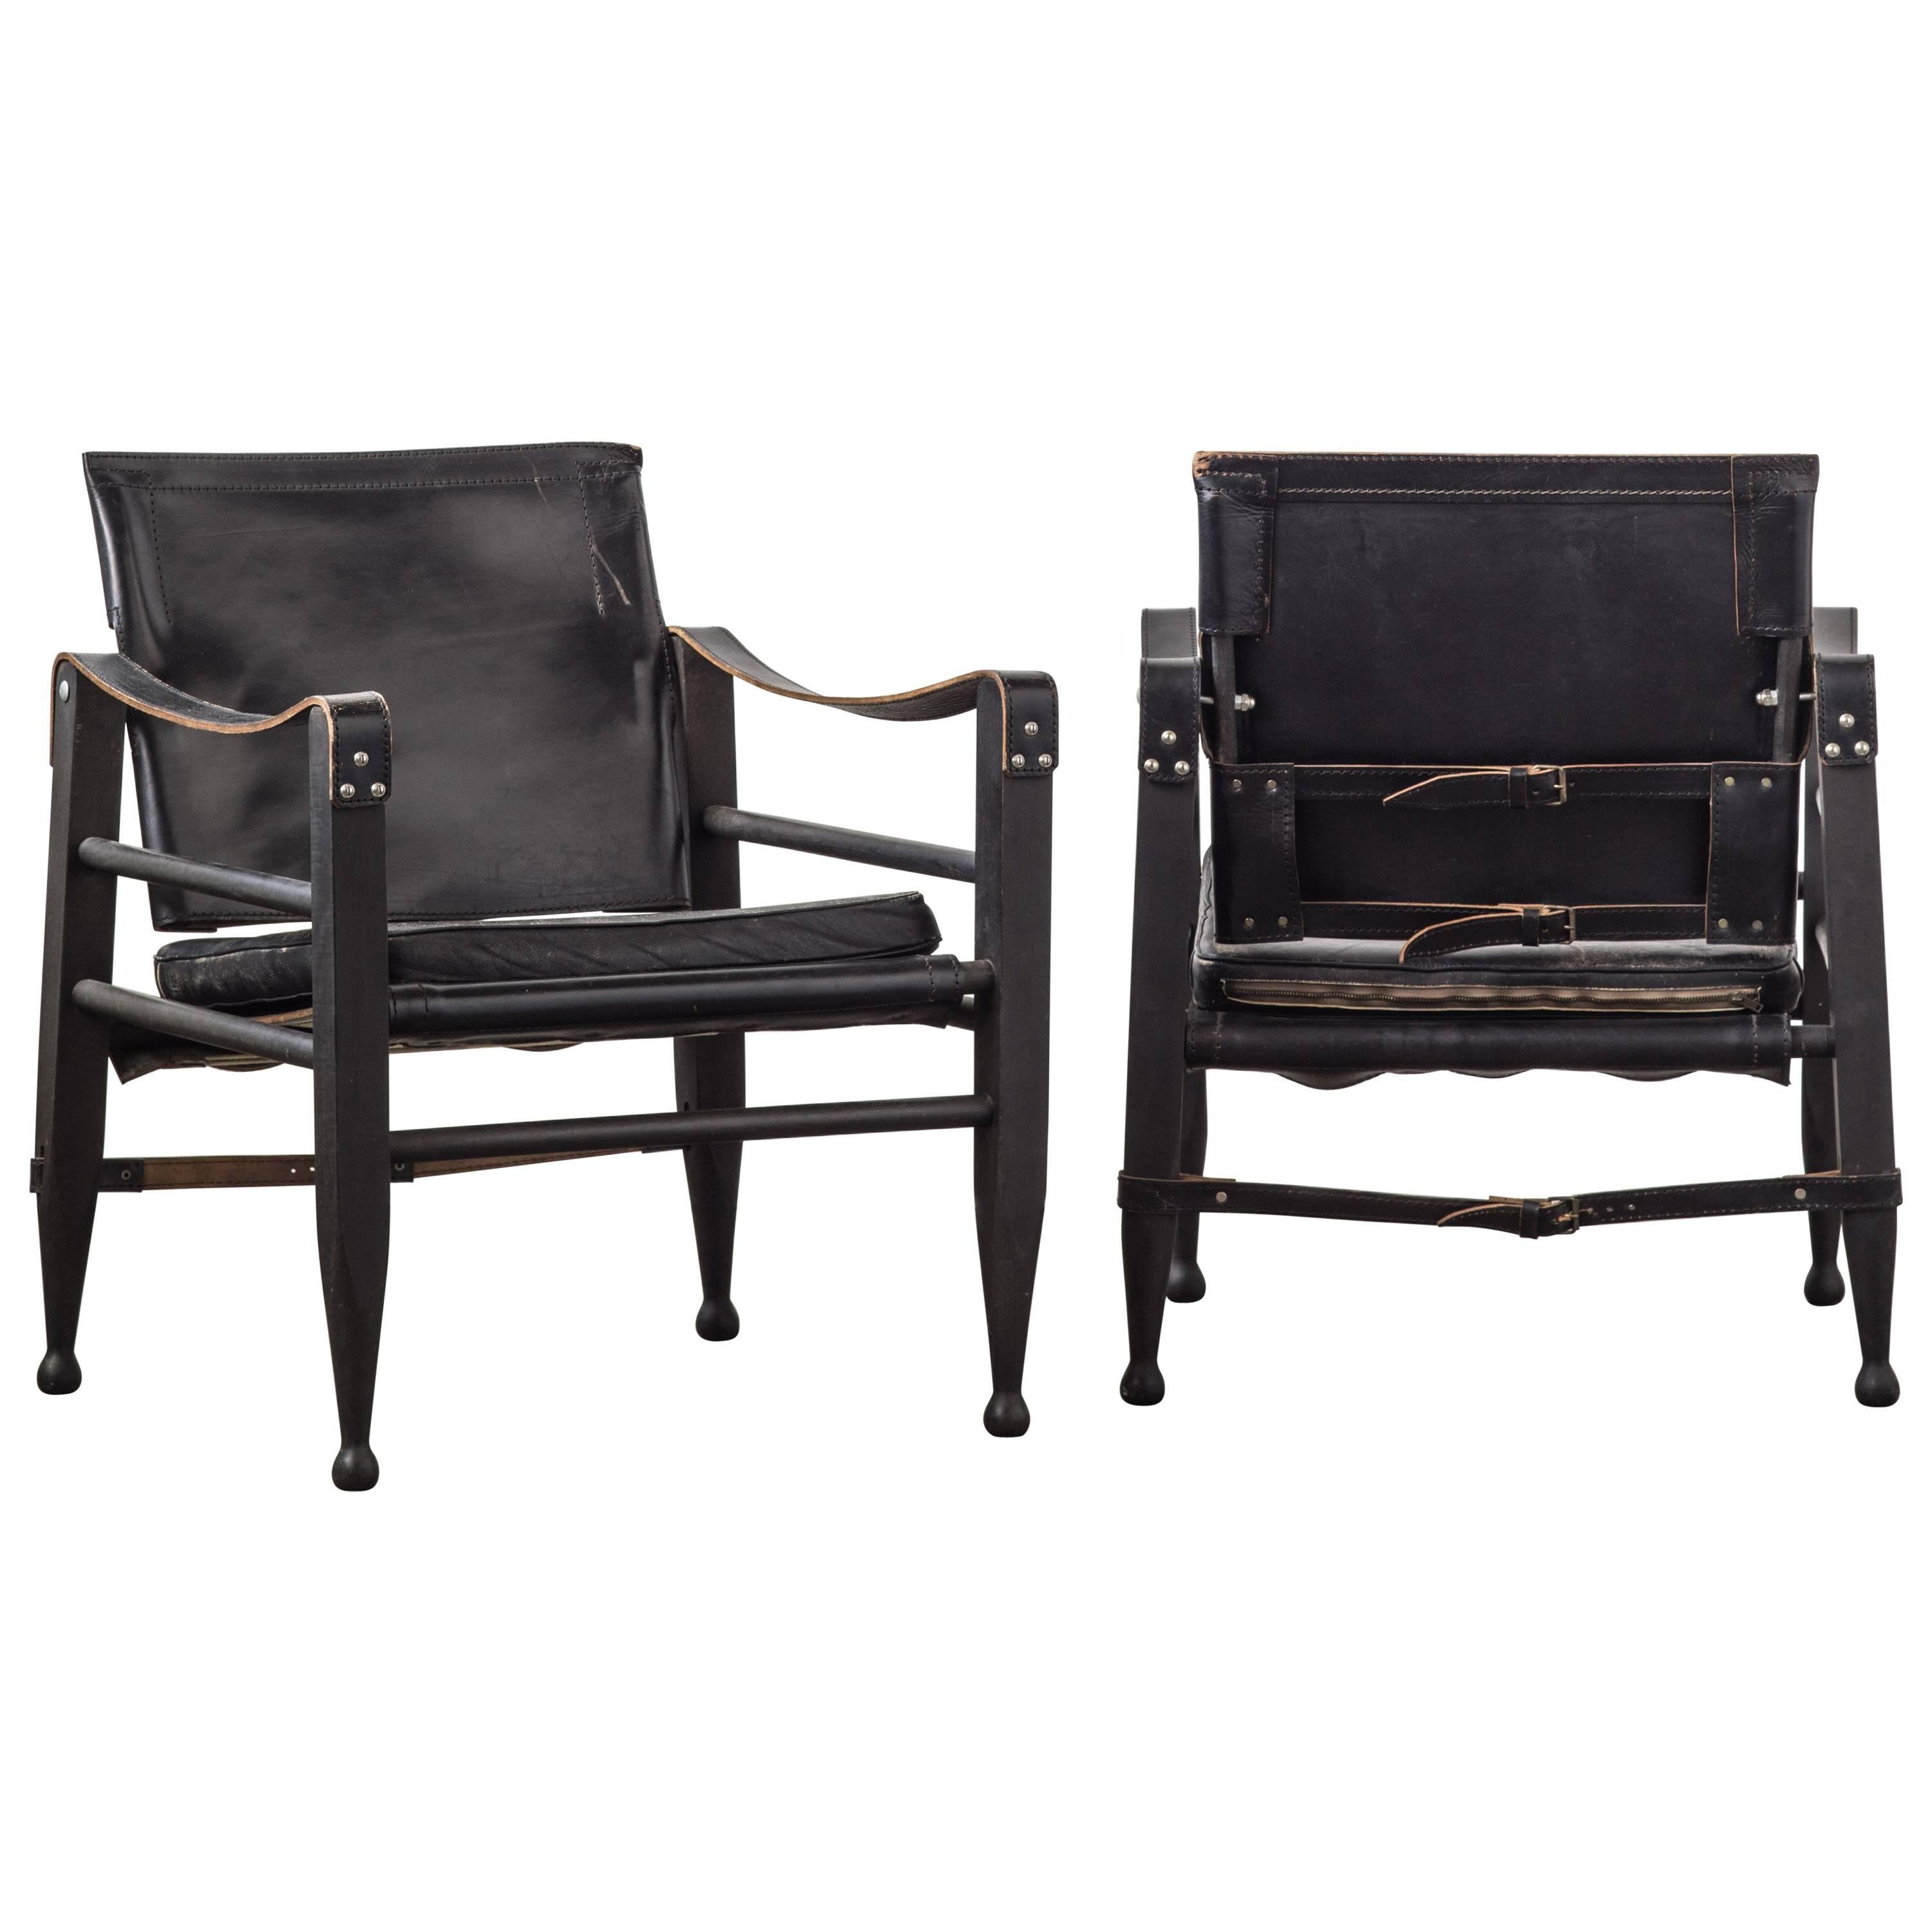 Pair of Black Leather Safari Chairs